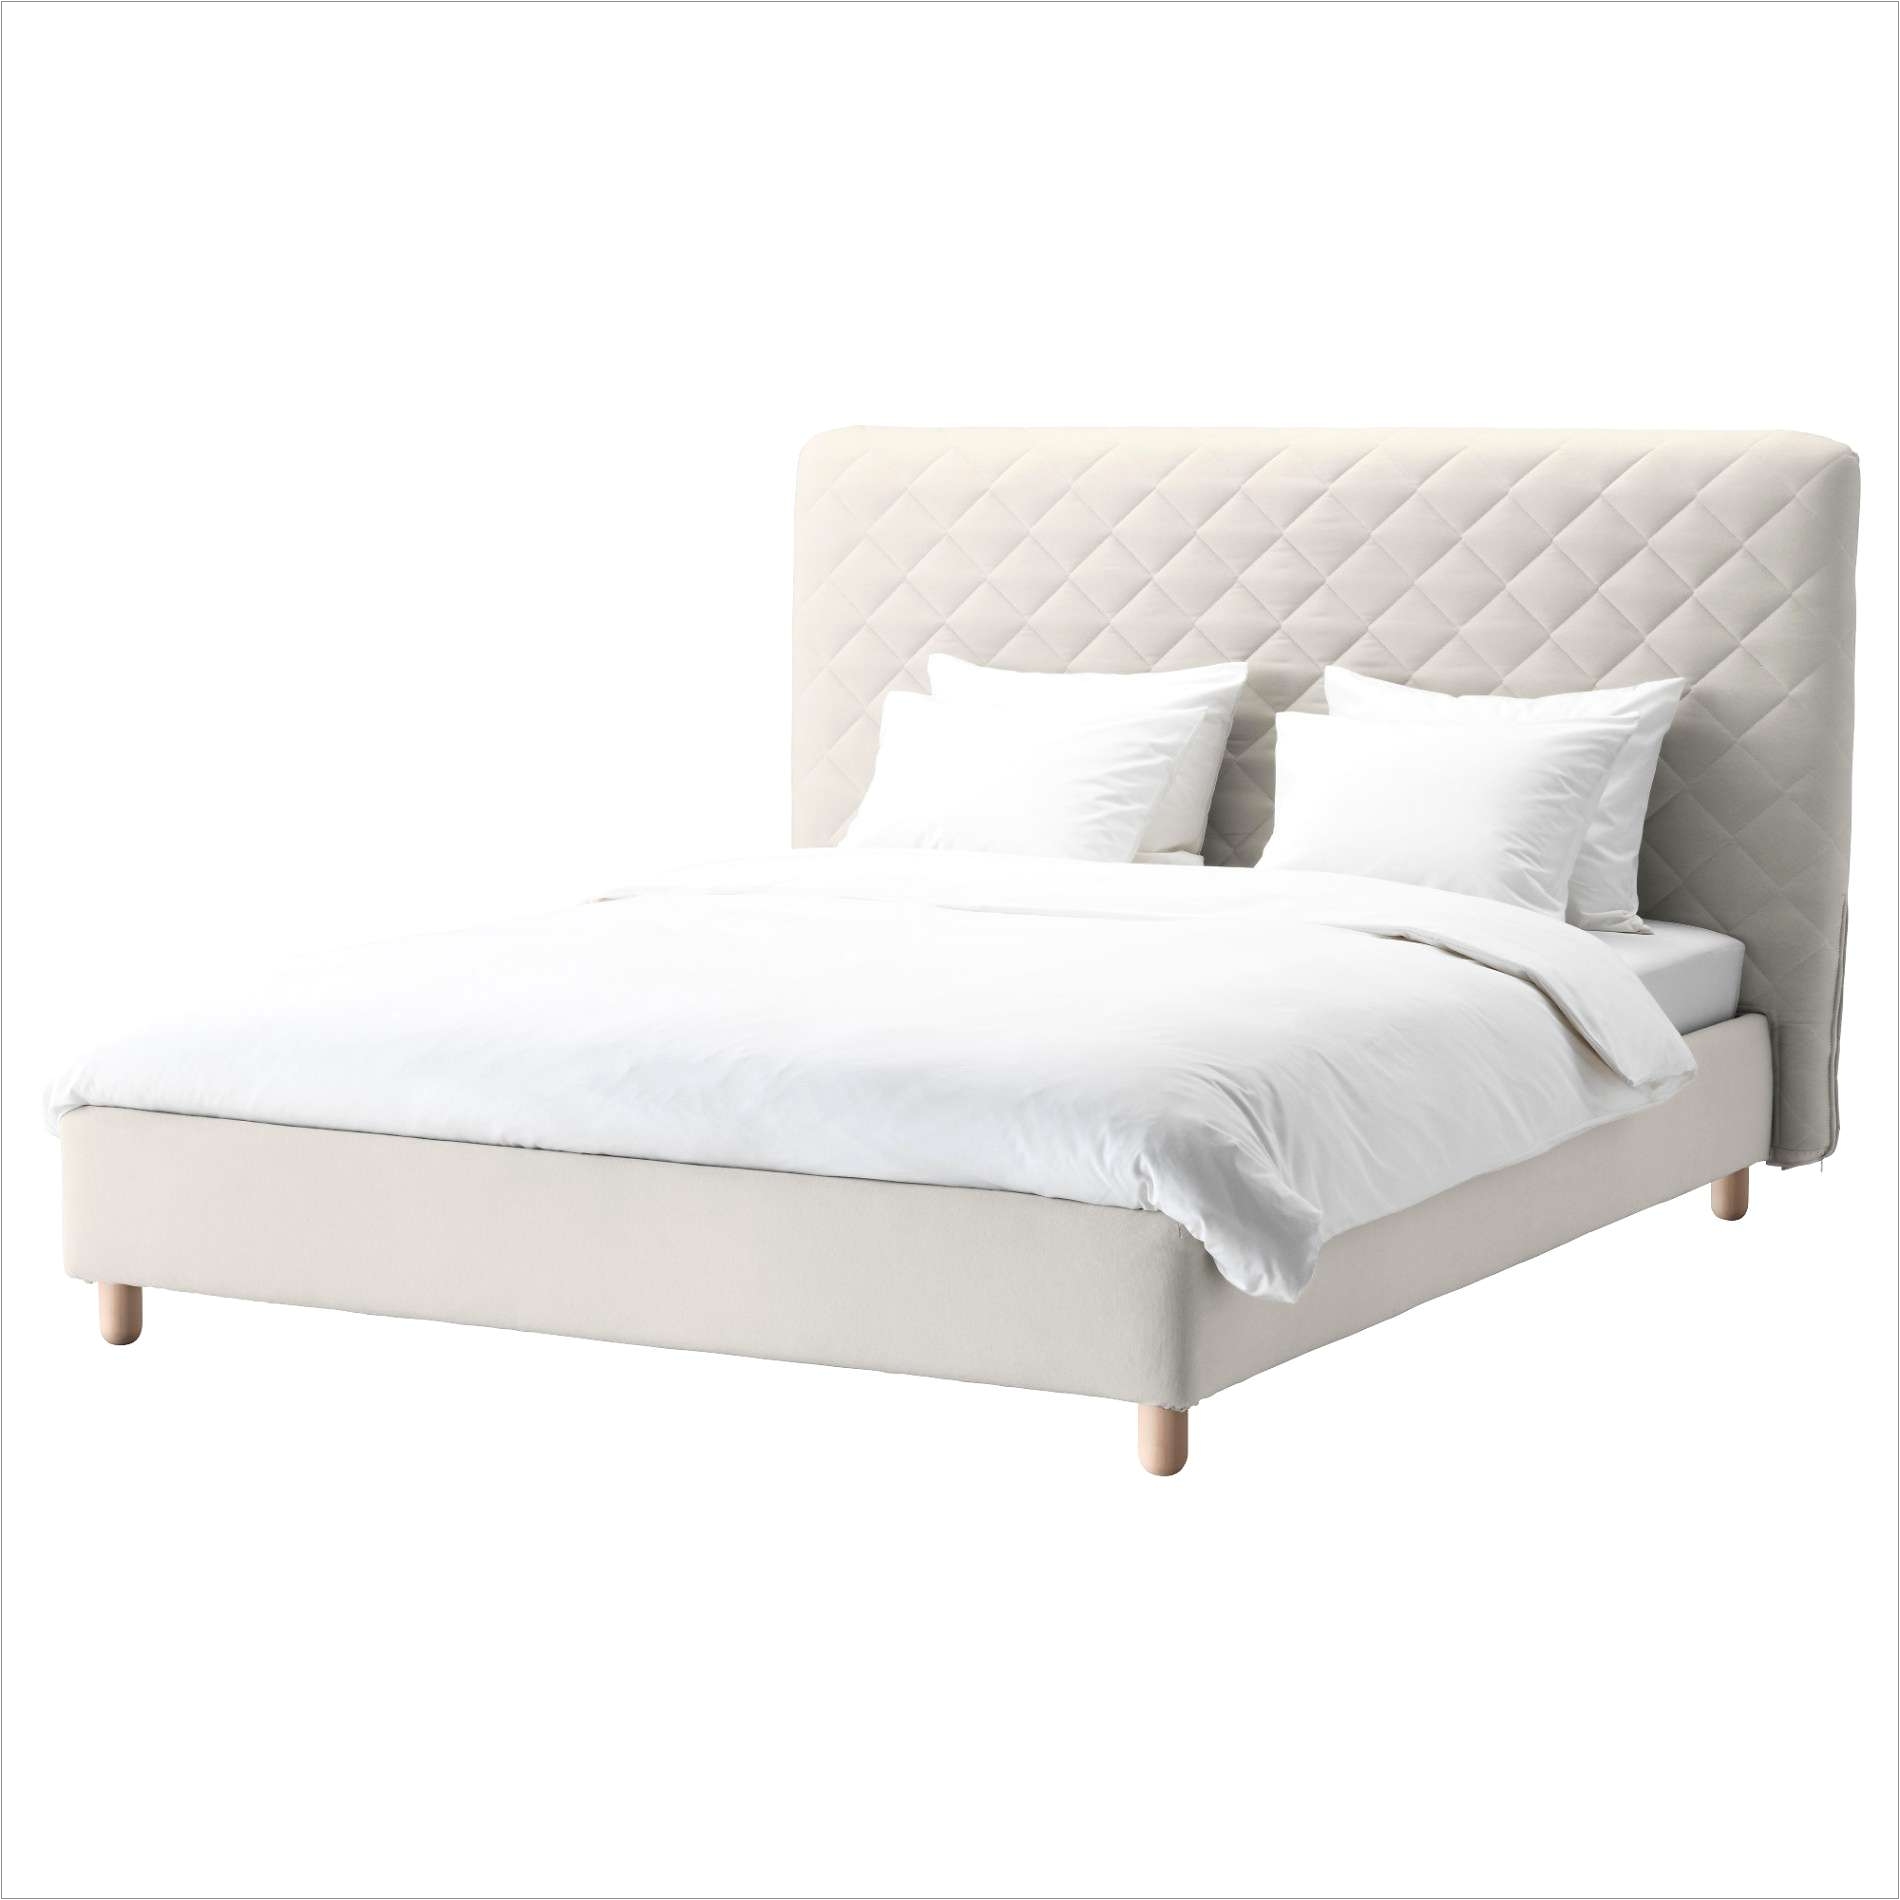 ikea queen mattress dimensions luxury floor bed frame ikea beautiful 1 80 bett awesome twin bett